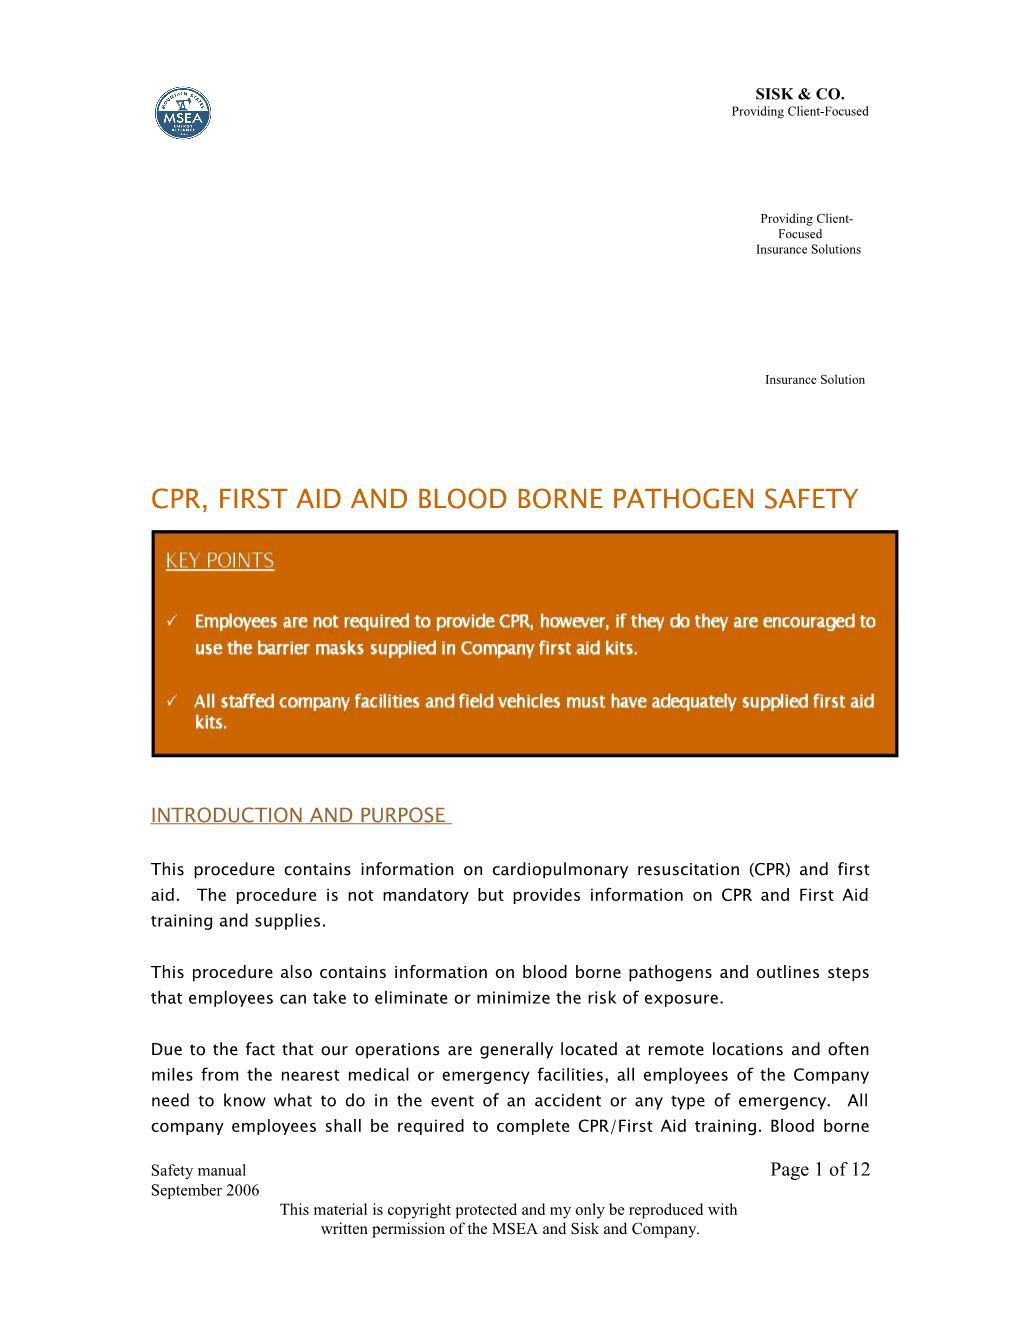 Cpr, First Aid and Blood Borne Pathogen Safety